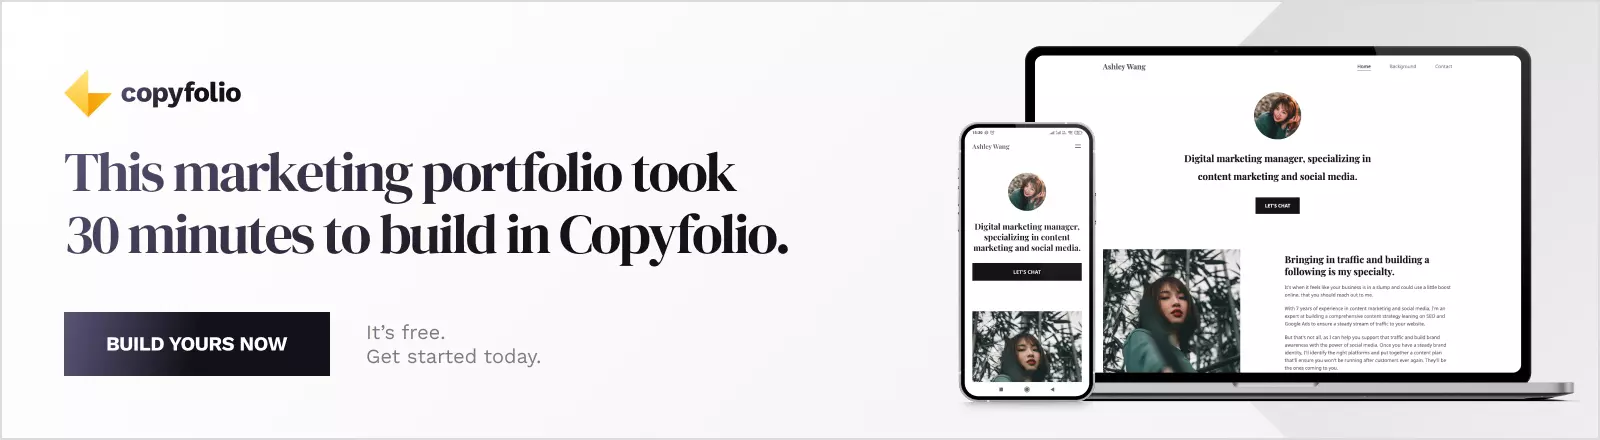 This marketing portfolio took 30 minutes to build in Copyfolio. Build yours now.